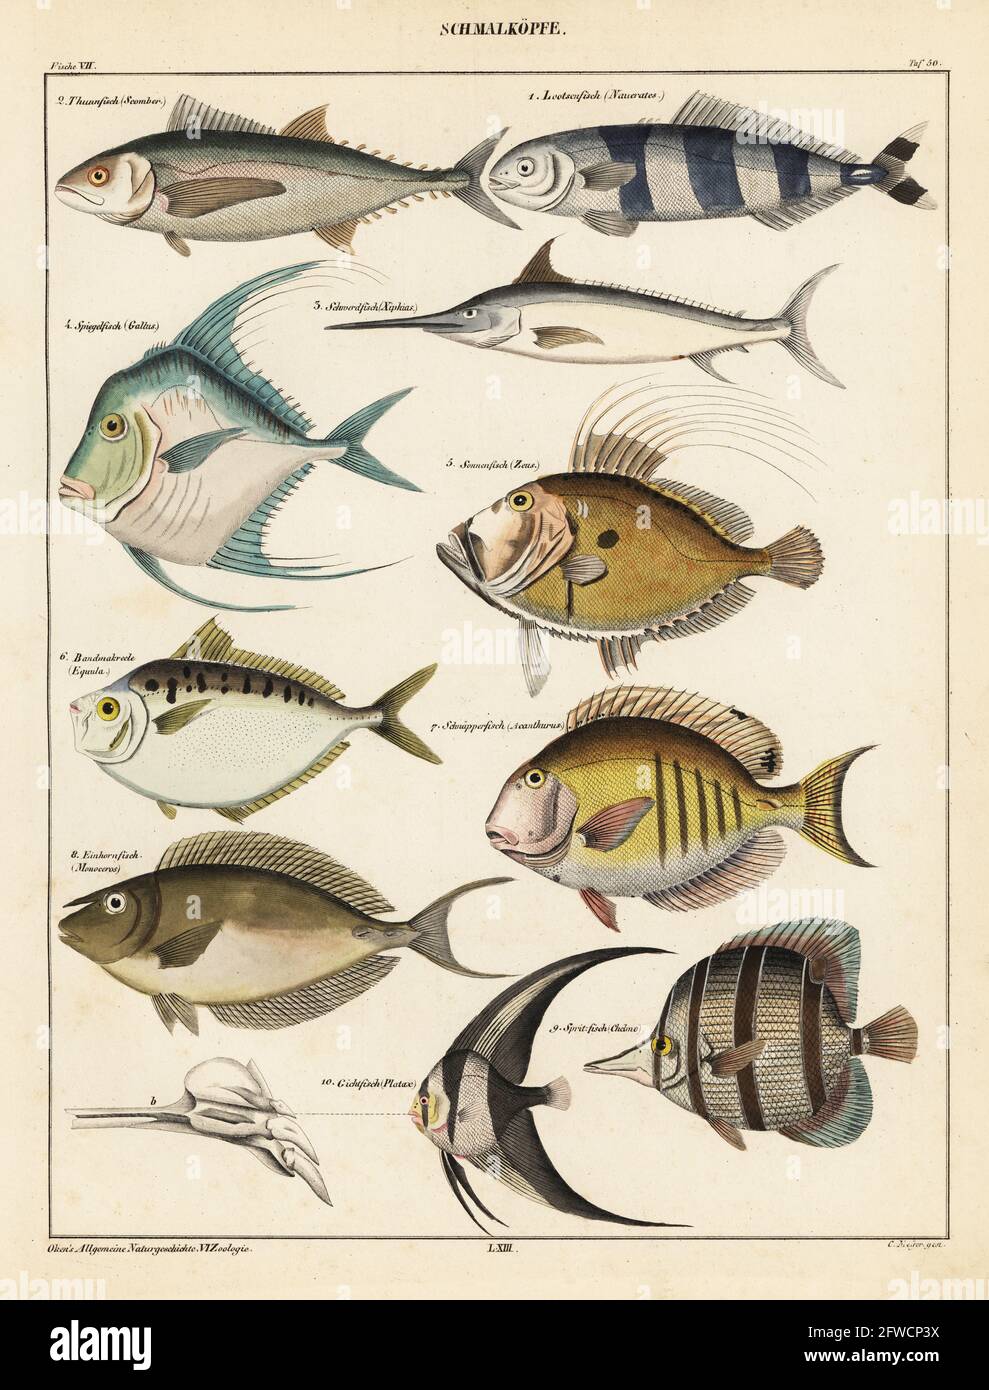 https://c8.alamy.com/comp/2FWCP3X/varieties-of-fish-plate-50-schmalkopfe-1-pilot-fish-naucrates-ductor-lootsenfisch-2-endangered-atlantic-bluefin-tuna-thunnus-thynnus-thunnfisch-3-swordfish-xiphias-gladius-schwerdfisch-4-african-pompano-alectis-ciliaris-spiegelfisch-5-john-dory-zeus-faber-sonnenfisch-6-pugnose-ponyfish-secutor-insidiator-bandmakreele-7-doctorfish-ananthurus-chirurgus-schnapperfisch-8-unicorn-leatherjacket-aluterus-monoceros-einhornfisc-9-copperband-butterflyfish-chelmon-rostratus-spritzfisch-10-teira-batfish-platax-teira-gichtfisch-handcoloured-lithograph-by-c-meyer-from-lore-2FWCP3X.jpg